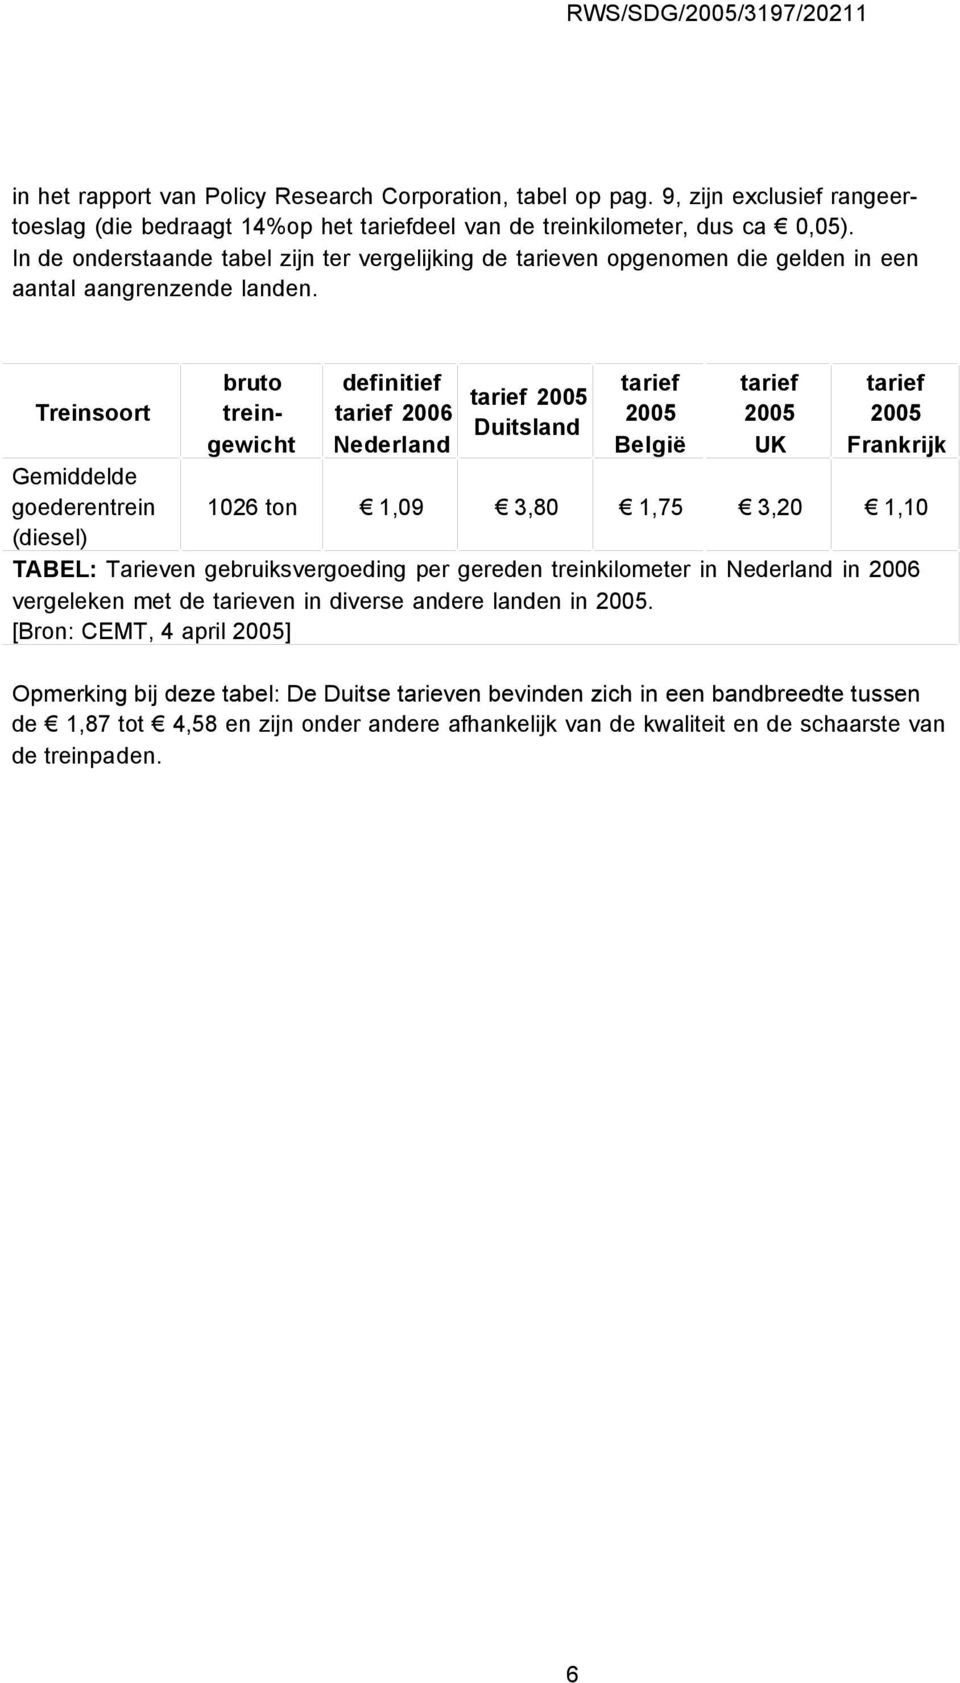 Treinsoort bruto treingewicht definitief tarief 2006 Nederland tarief 2005 Duitsland tarief 2005 België tarief 2005 UK tarief 2005 Frankrijk Gemiddelde goederentrein 1026 ton 1,09 3,80 1,75 3,20 1,10